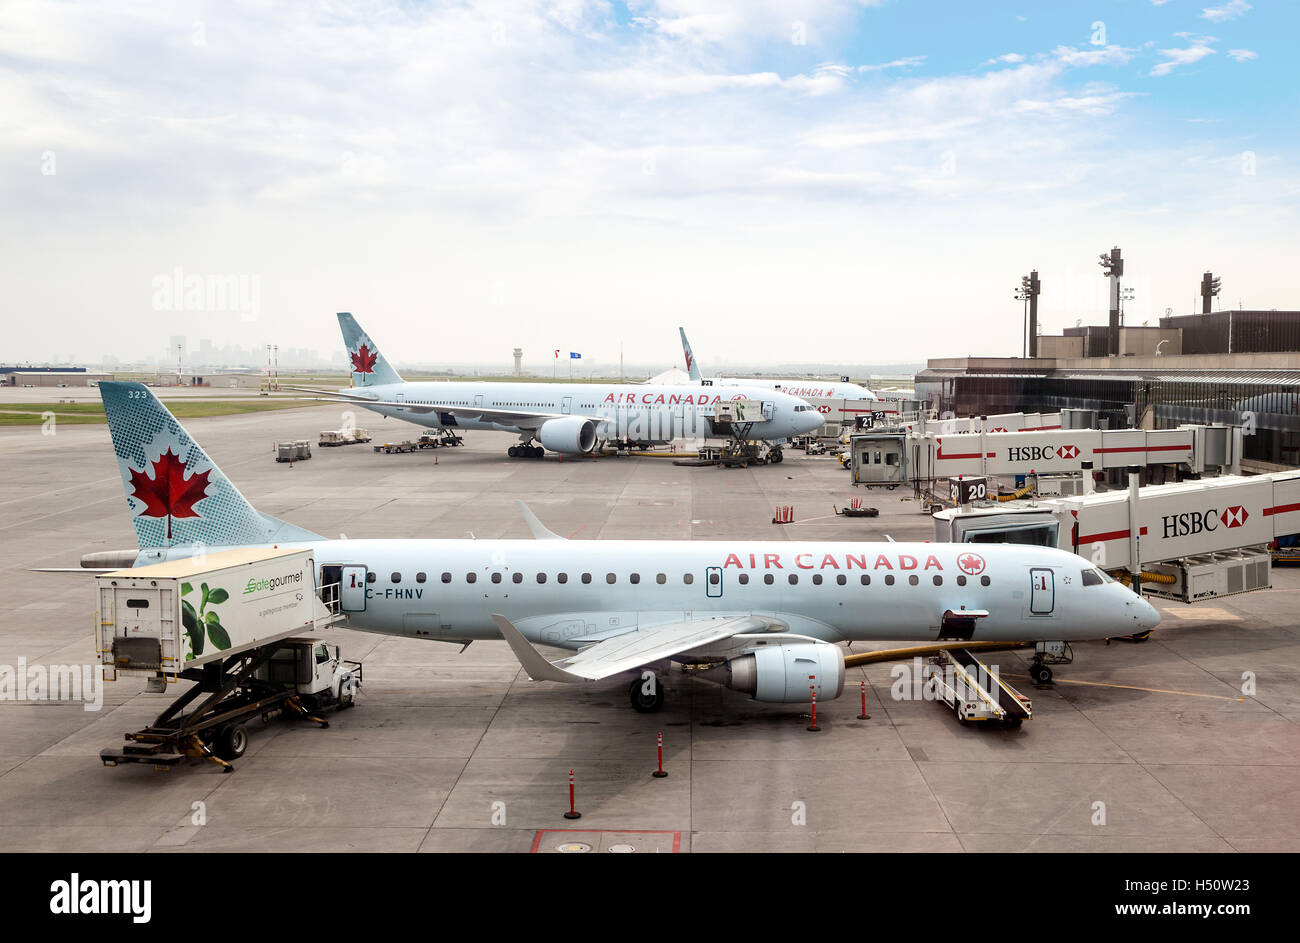 CALGARY, Kanada - 18 Juli: Air Canada kommerziellen Flugzeugen auf dem Rollfeld des Calgary International Airport 18. Juli 2014. Stockfoto